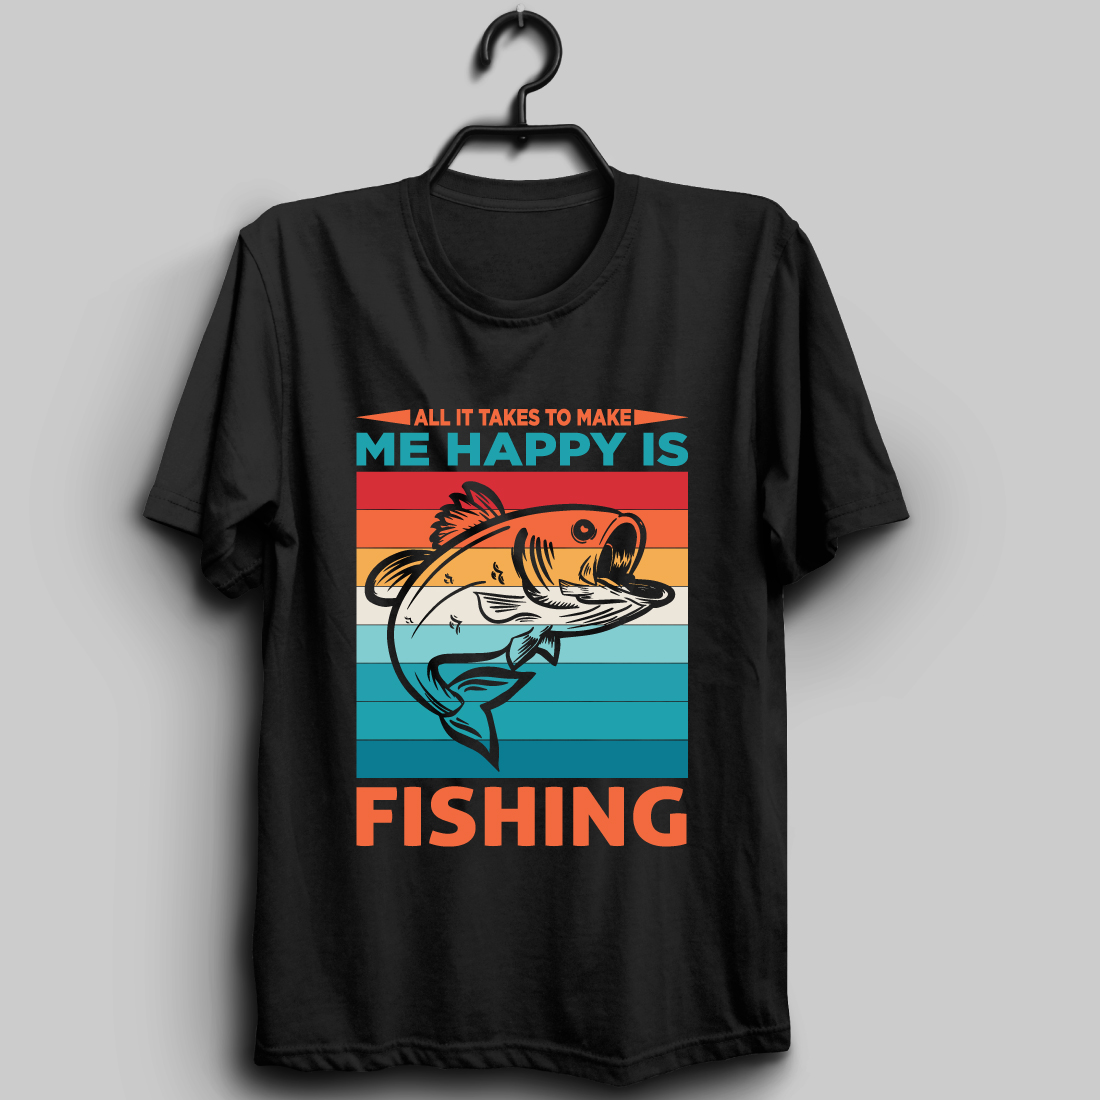 fishing t shirt design01 417